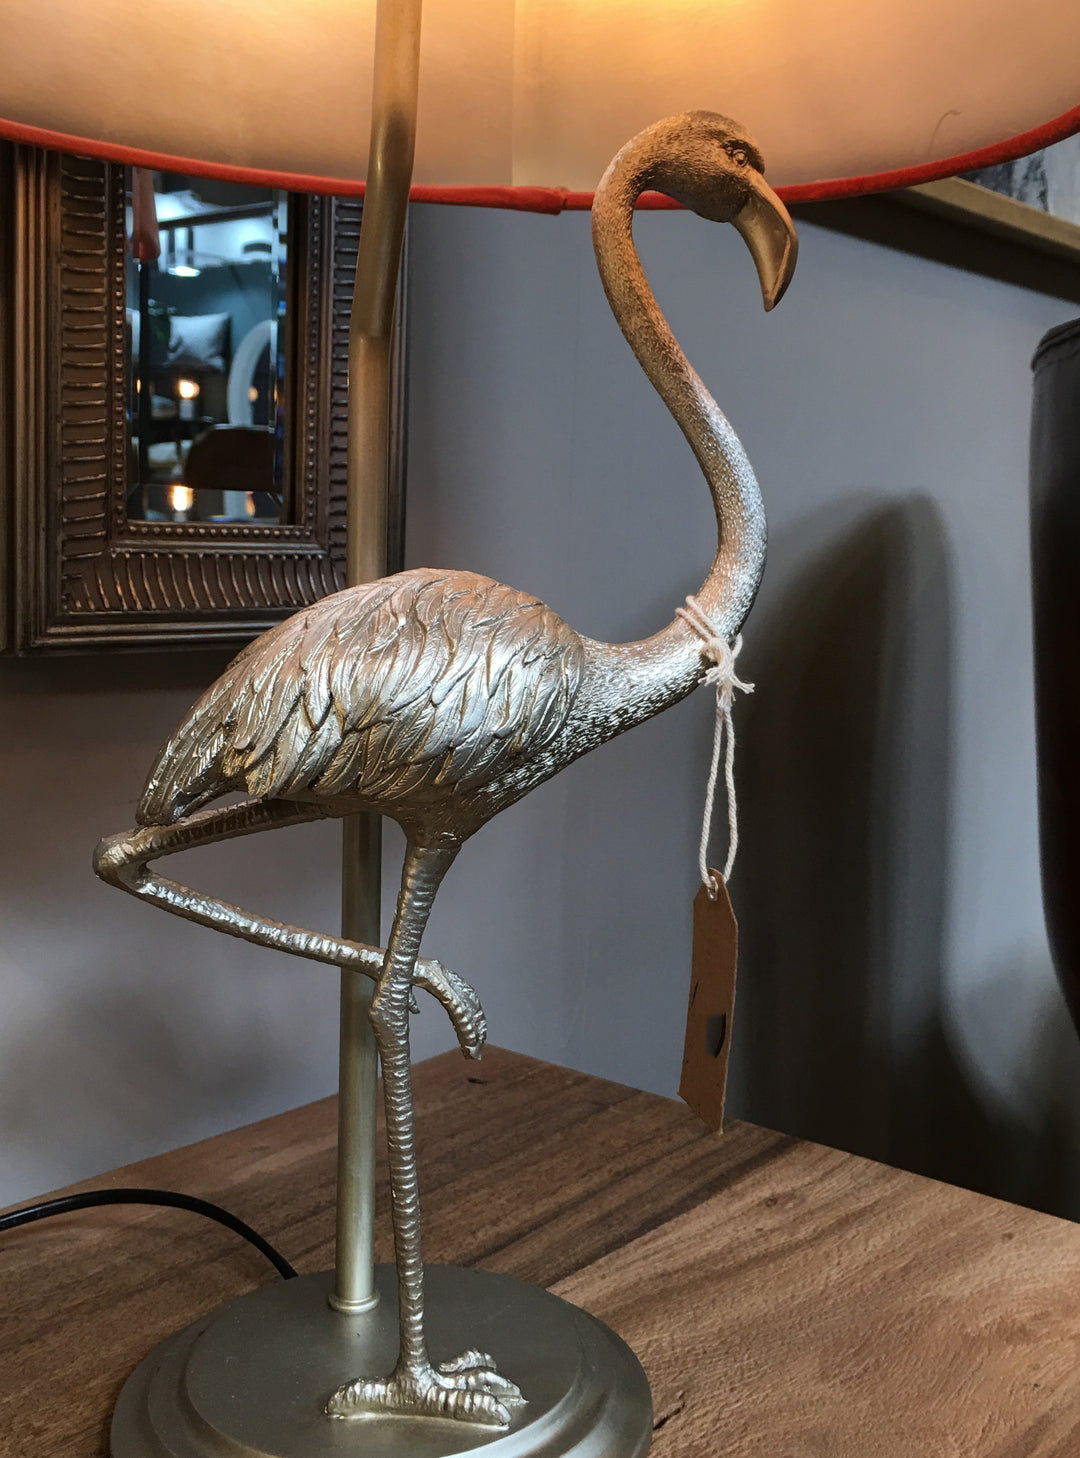 Flamingo Table lamp – Antique Silver Flamingo Lamp  – Coral Velvet Shade  – Table Lamp